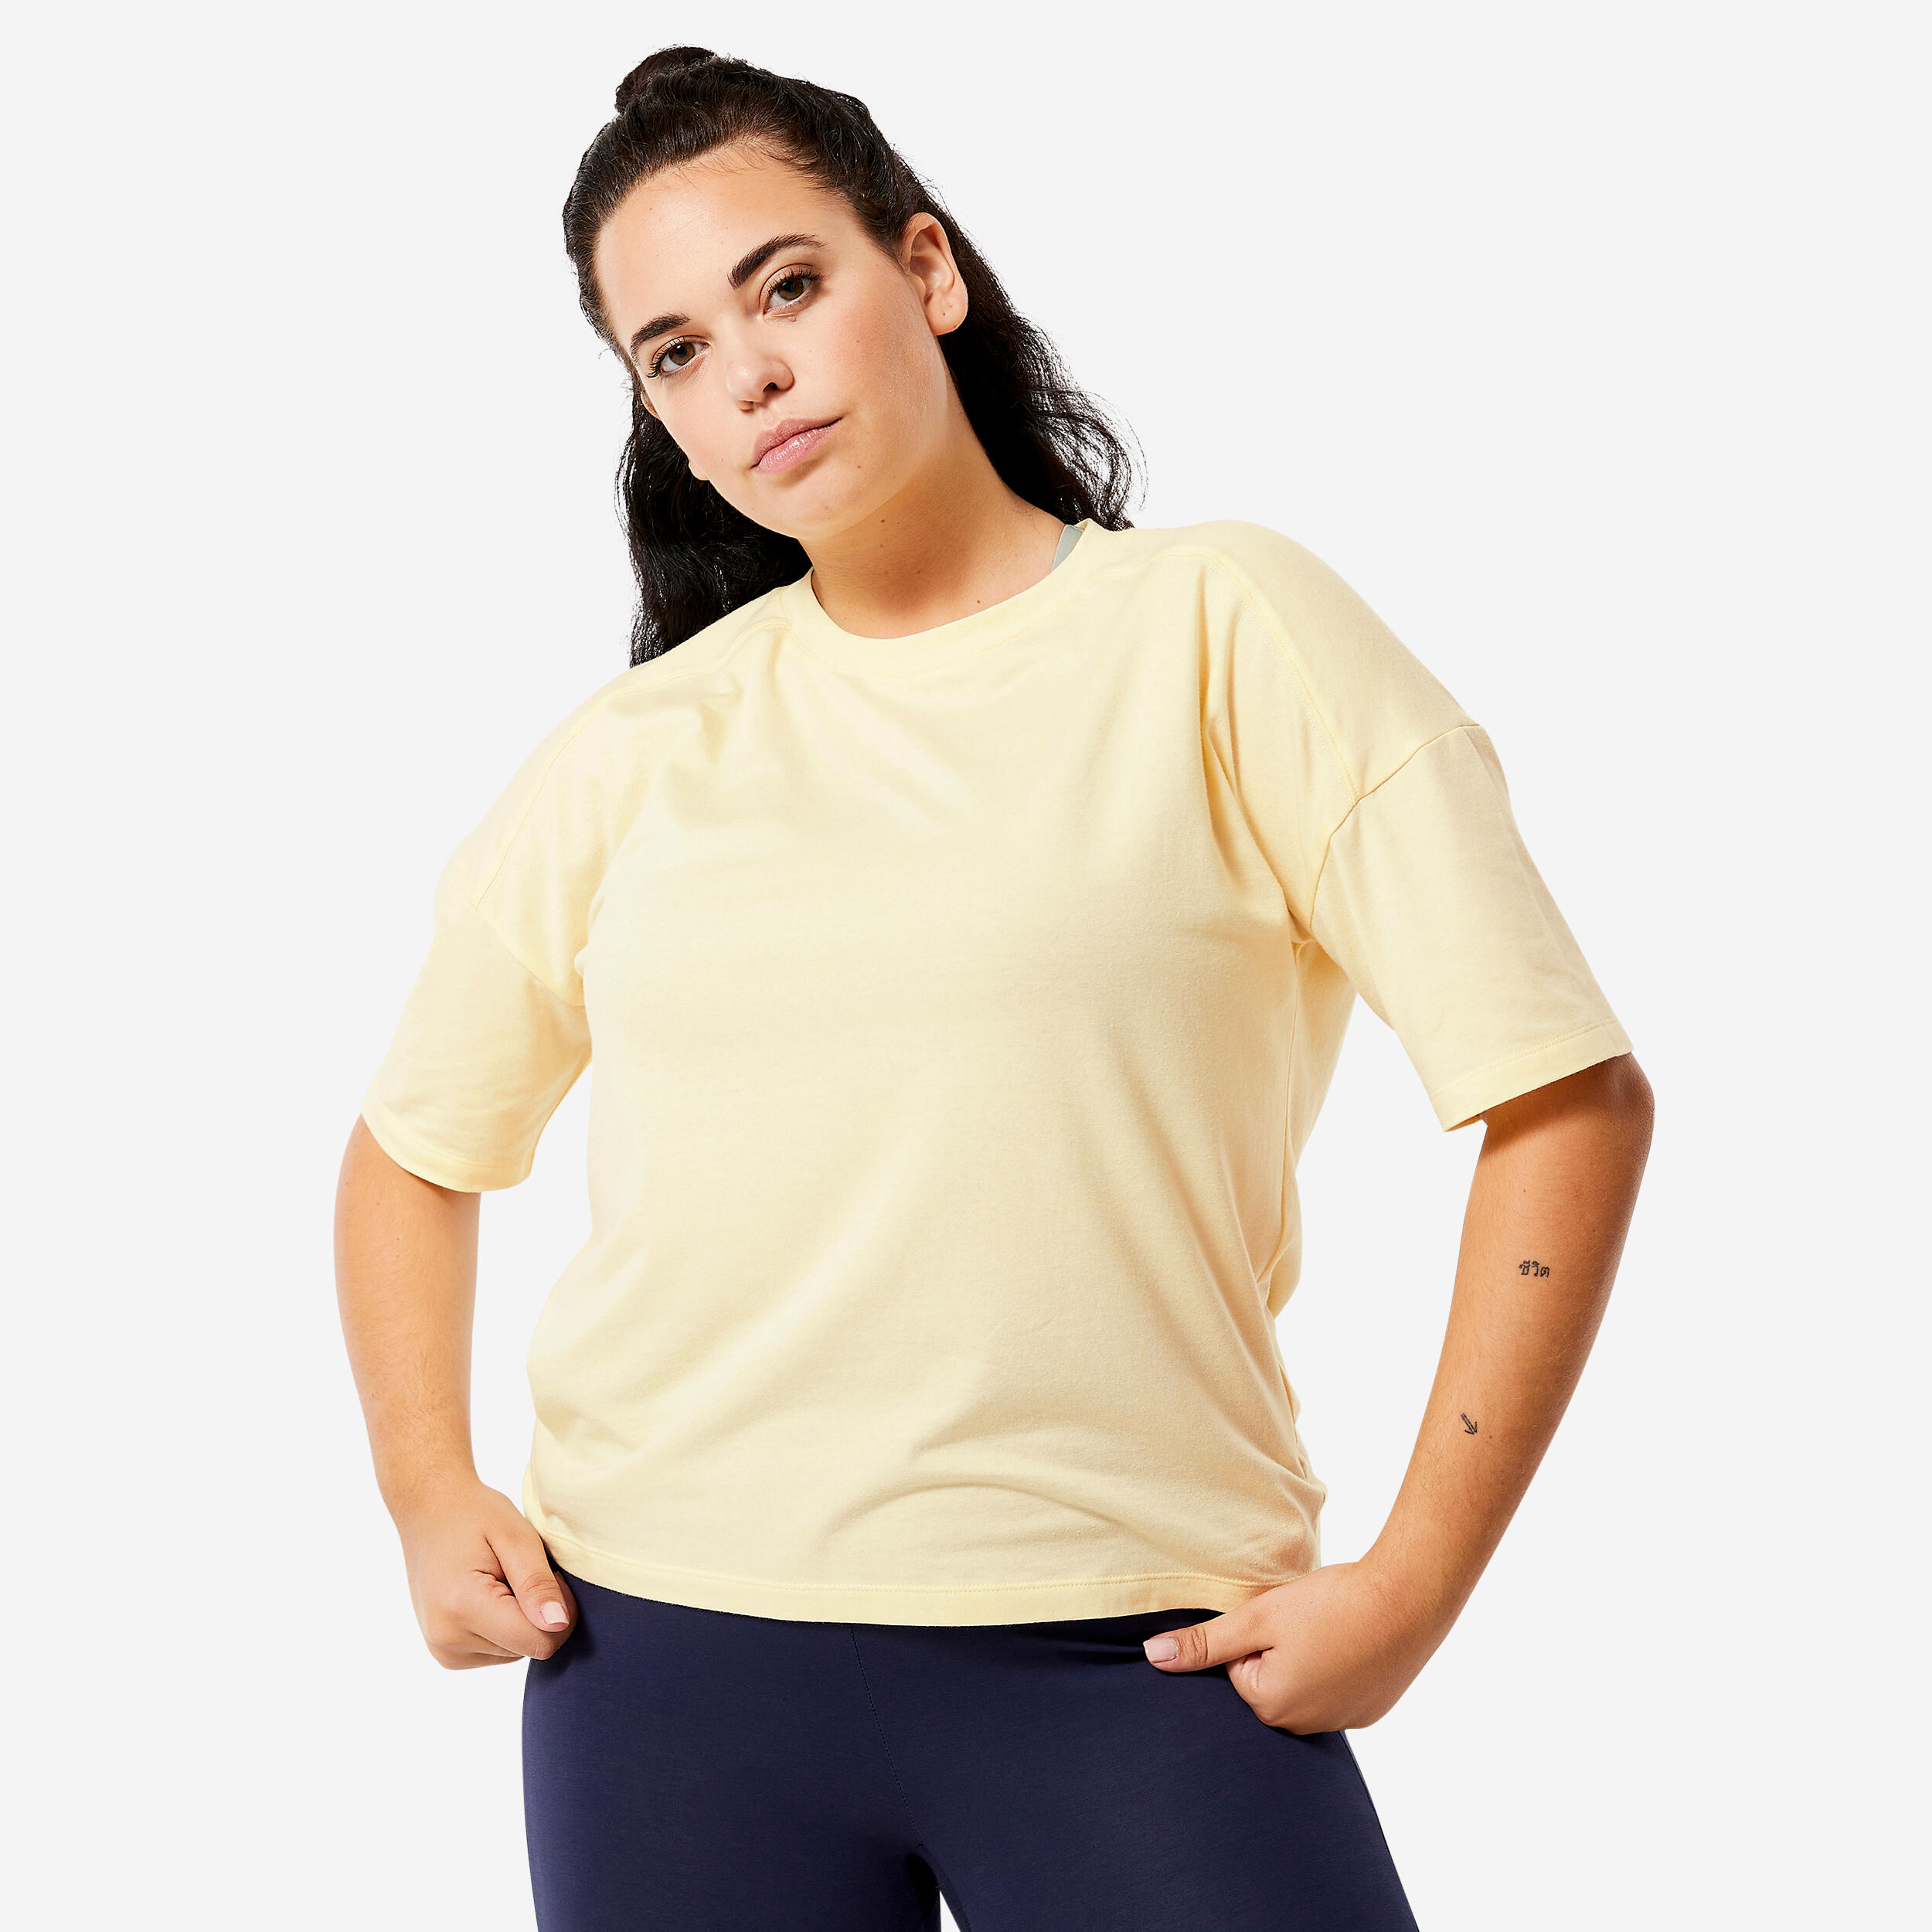 DOMYOS Women's Loose-Fit Fitness T-Shirt 520 - Vanilla